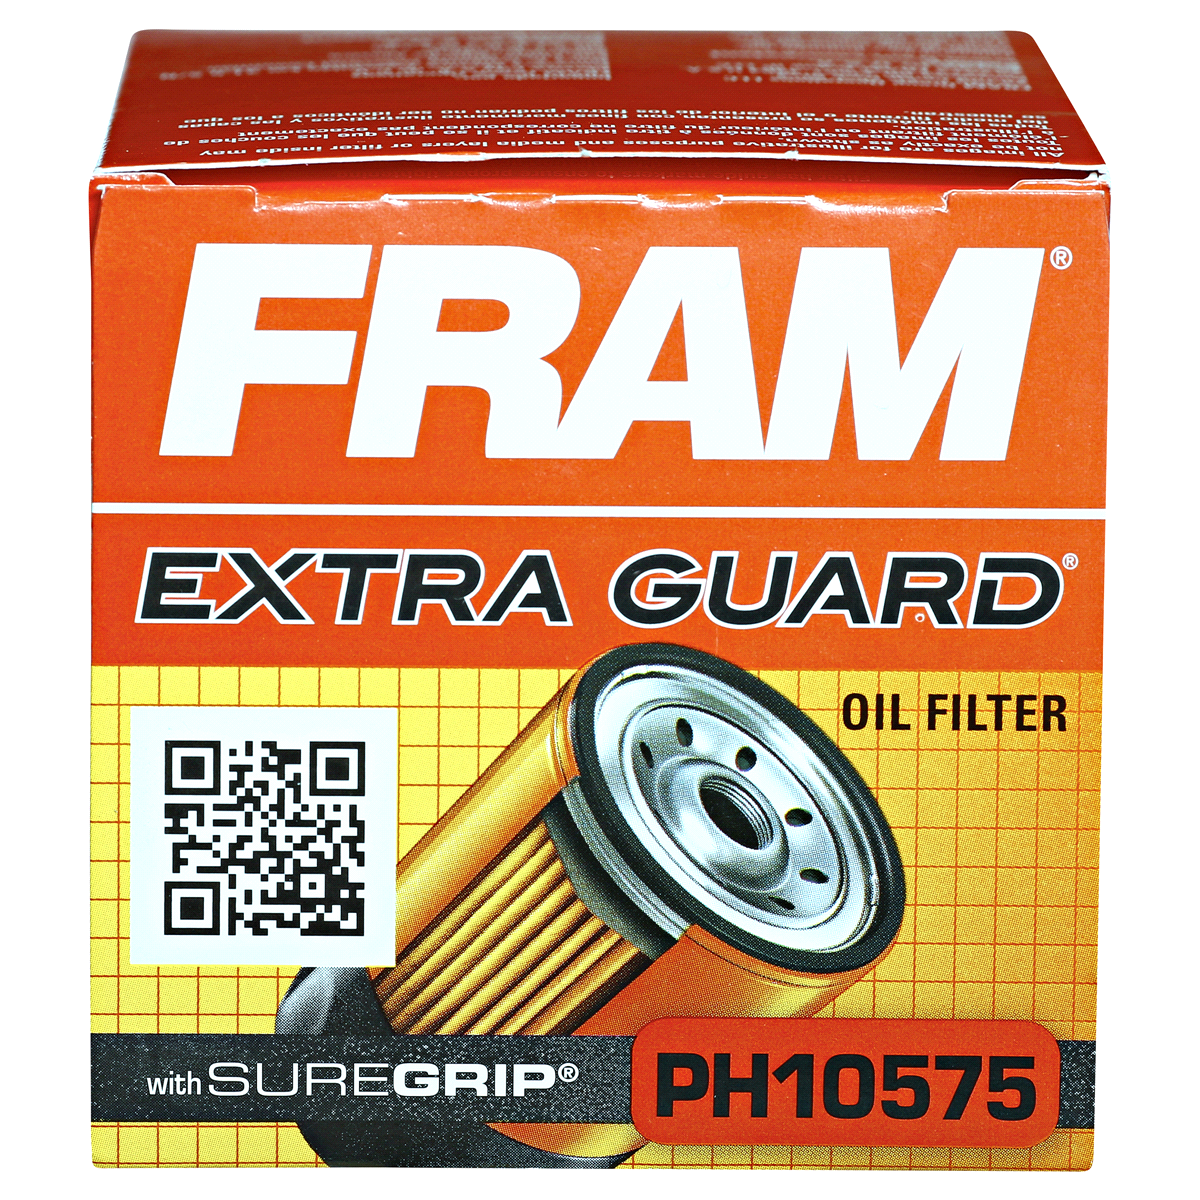 slide 5 of 5, Fram Extra Guard Oil Filter Ph10575, 1 ct